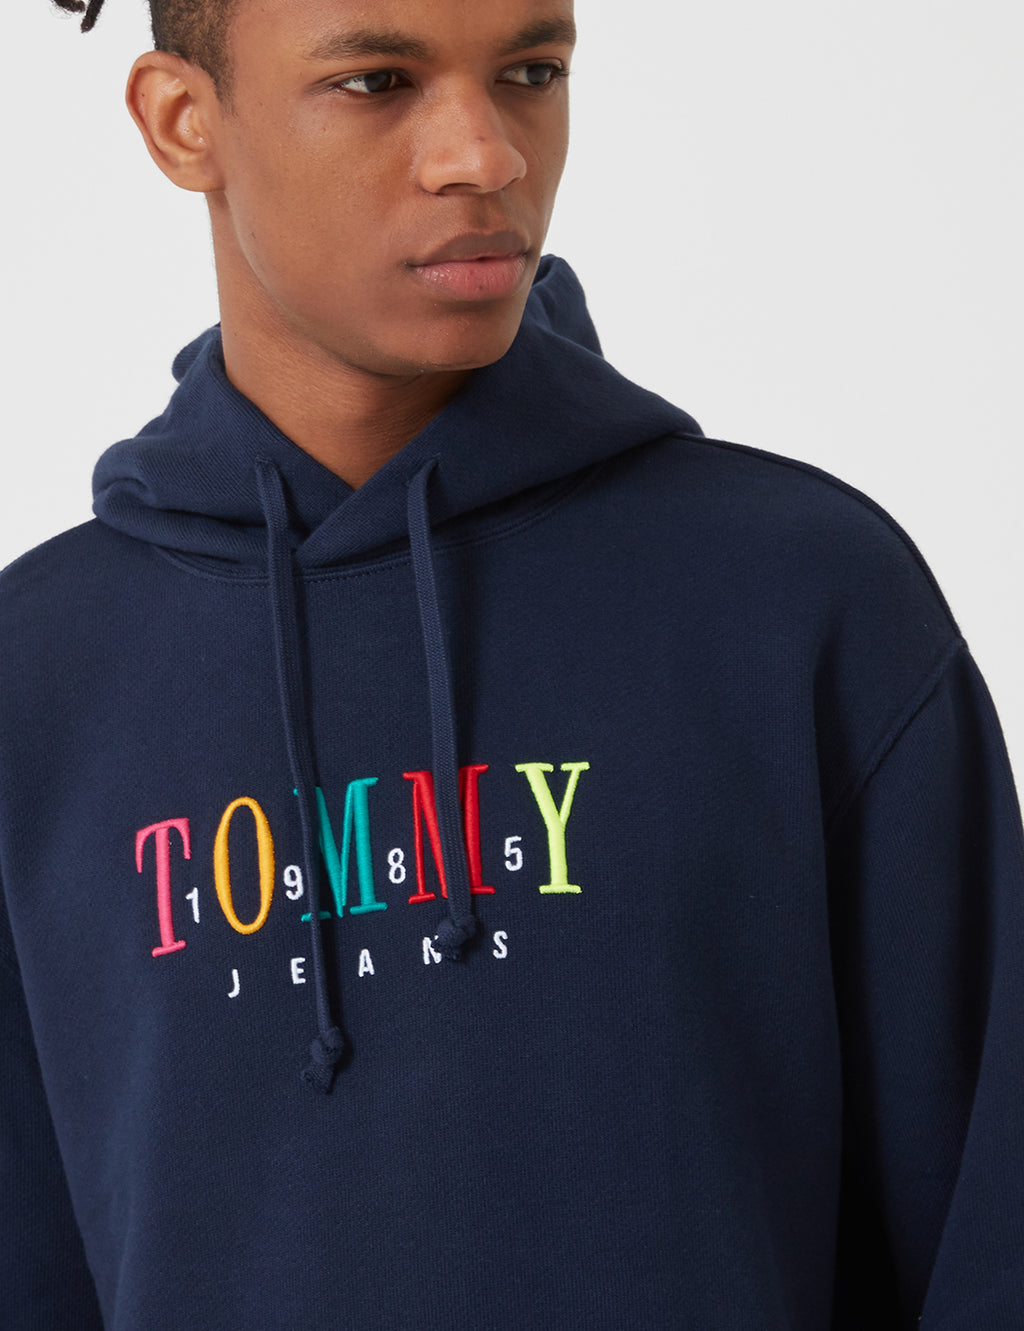 URBAN – Black Iris Tommy Hilfiger - | USA EXCESS EXCESS. Sweatshirt Graphic URBAN Hooded